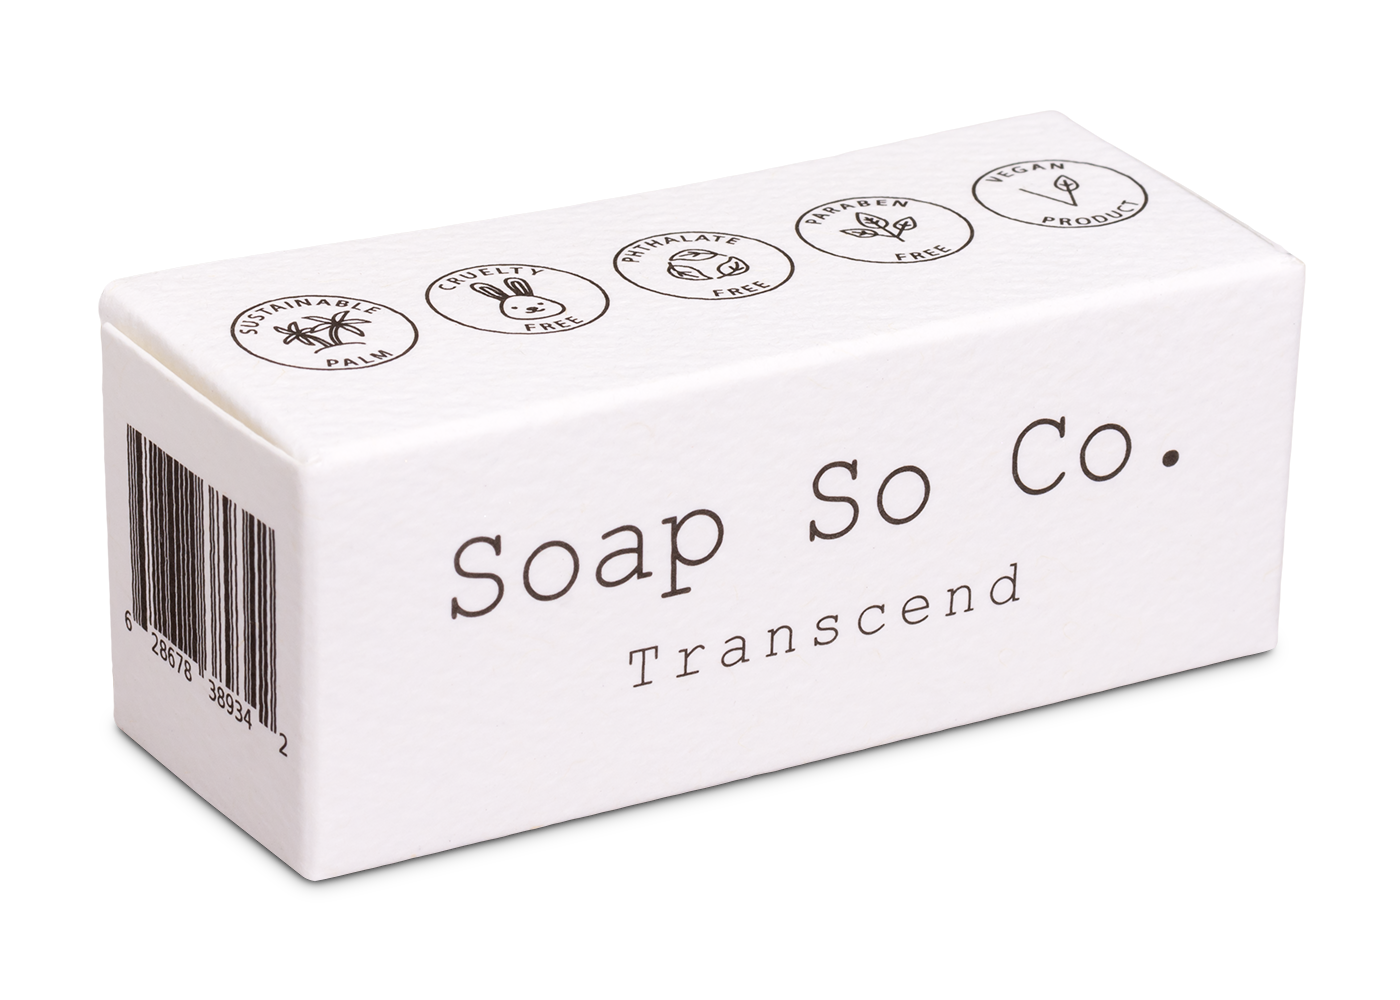 TRANSCEND - MINI - Soap So Co.